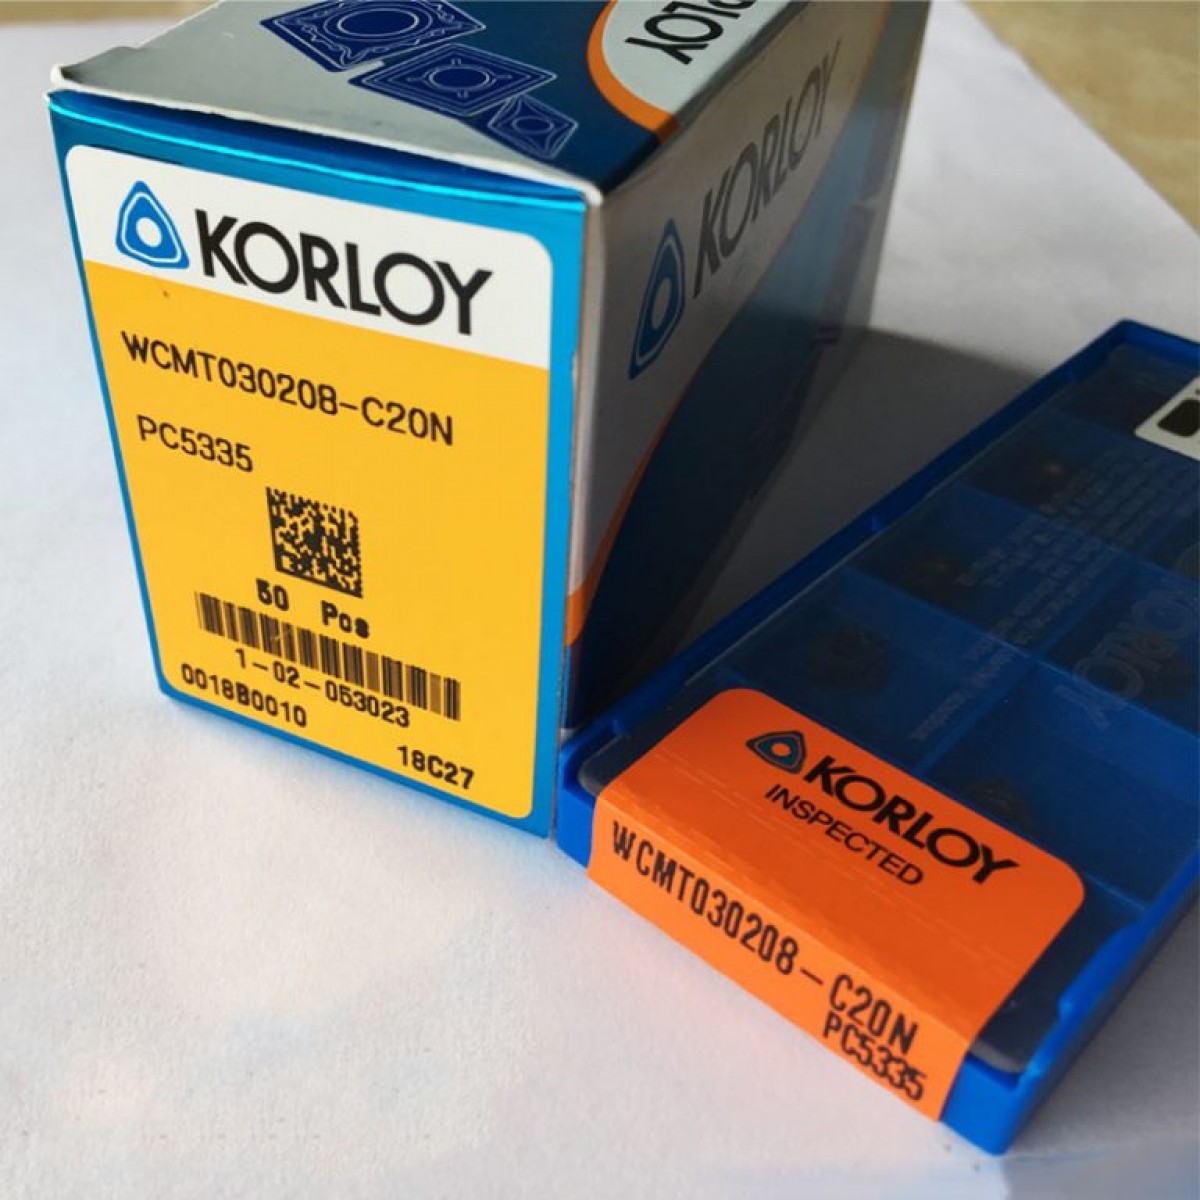 KORLOY - WCMT030208-C20N PC5335